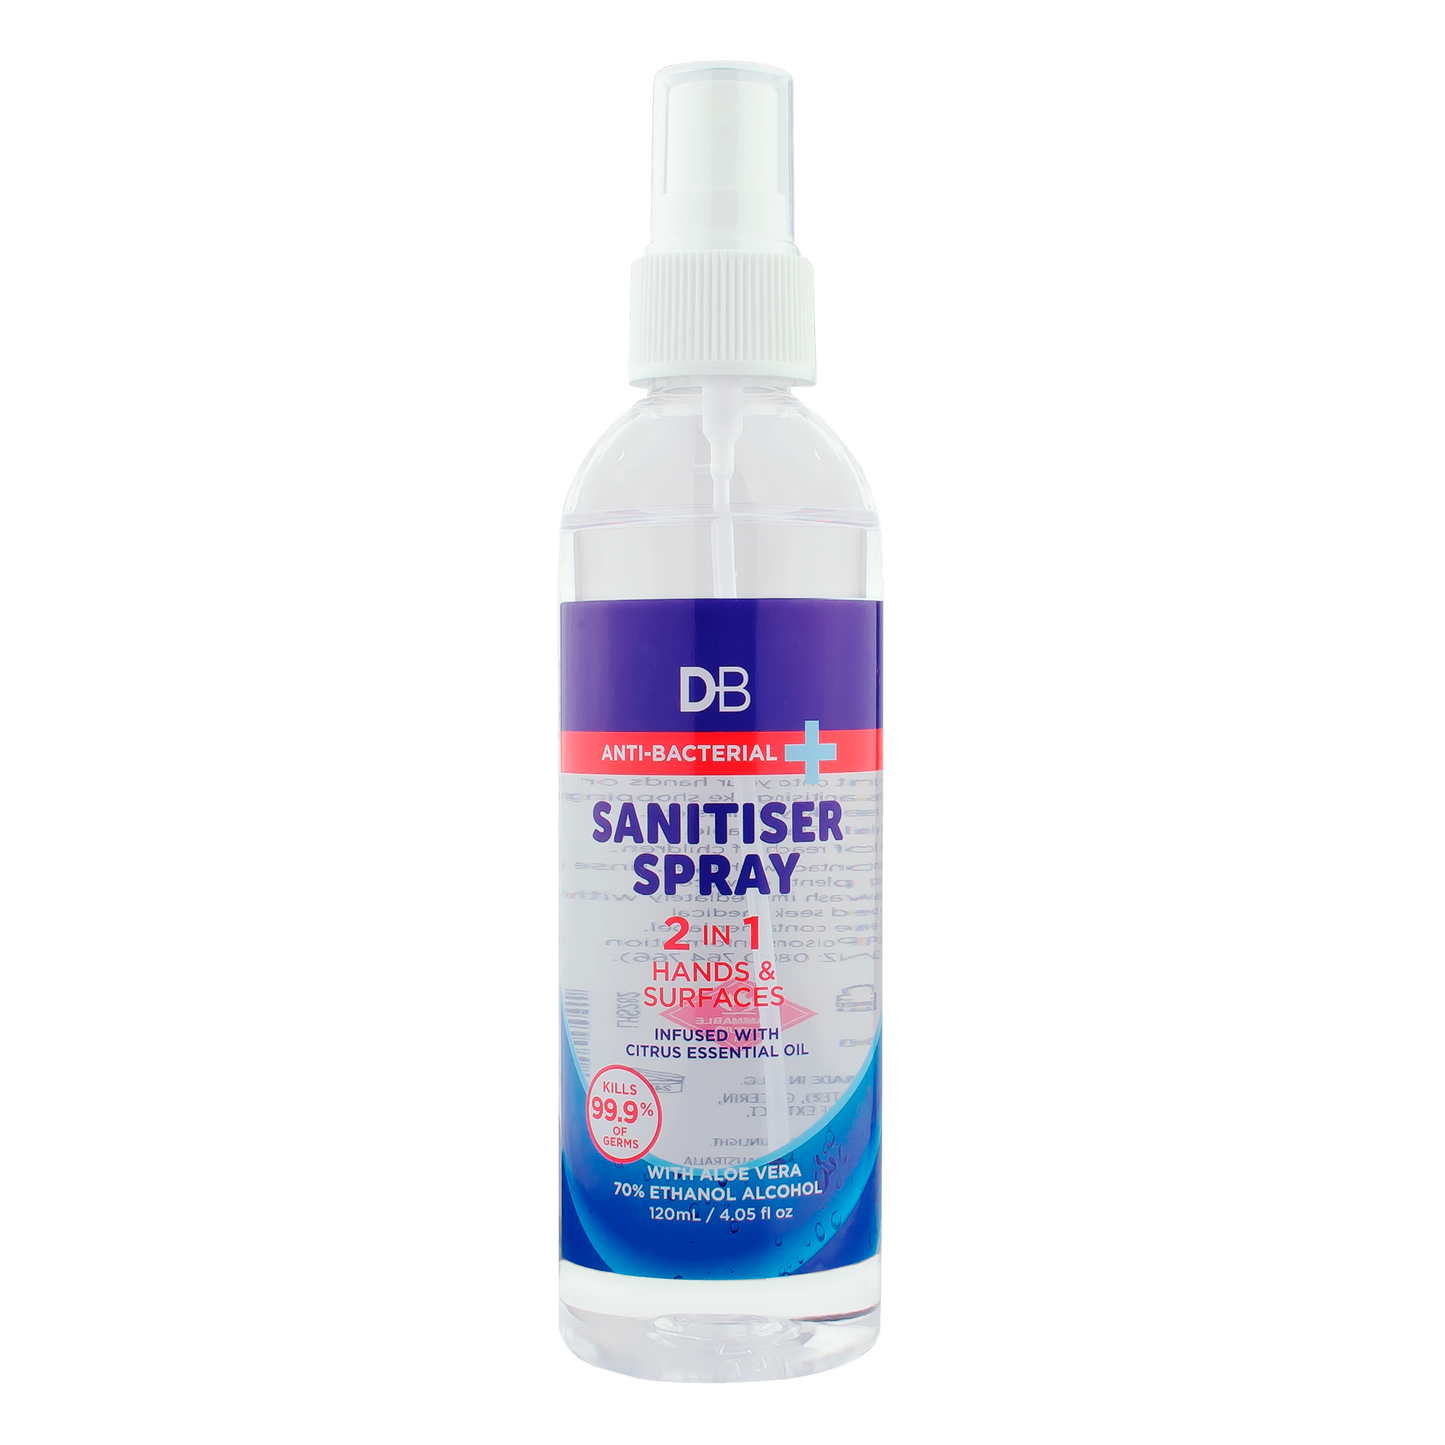 Anti-bacterial 2-in-1 Sanitiser Spray 120ml | DB Cosmetics